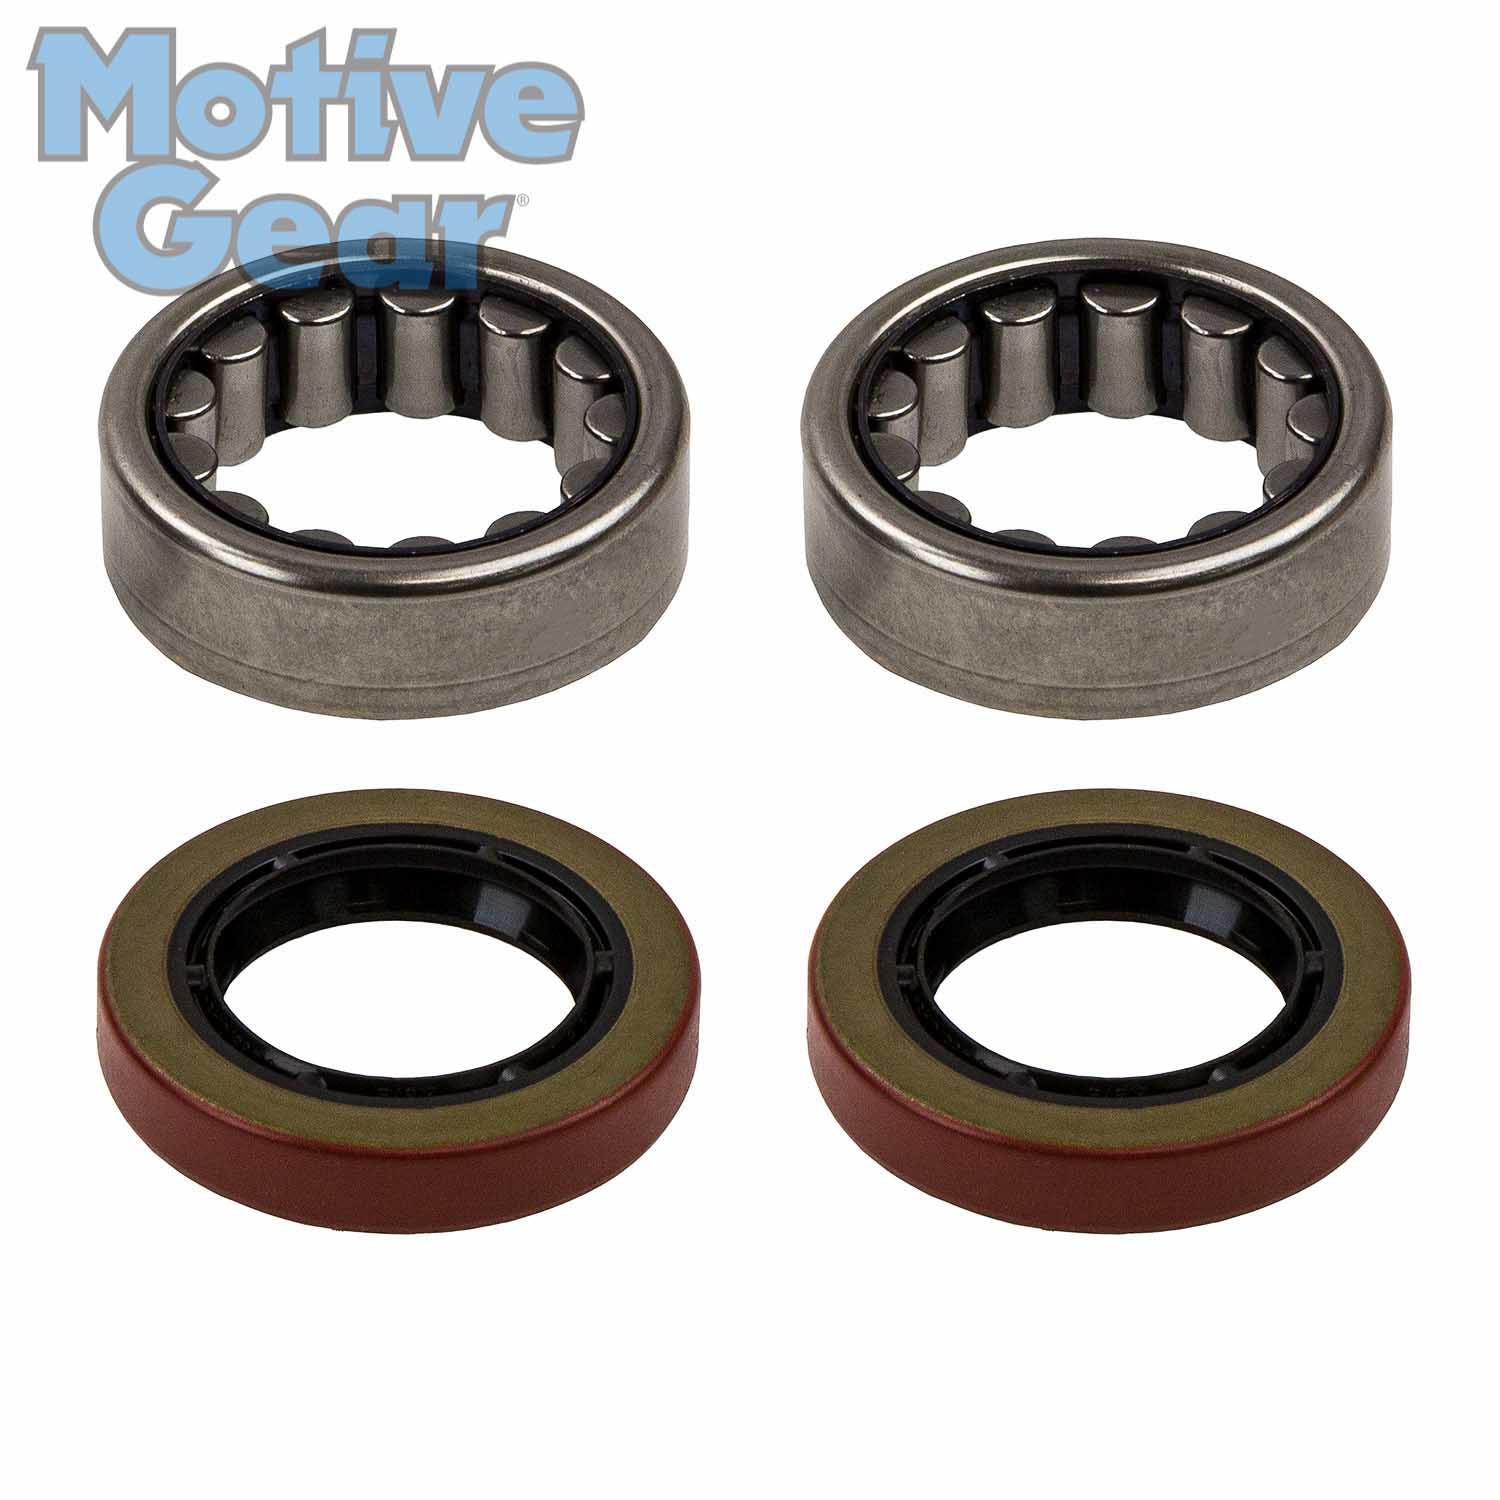 Motive Gear KIT 6408 Axle Bearing and Seal Kit